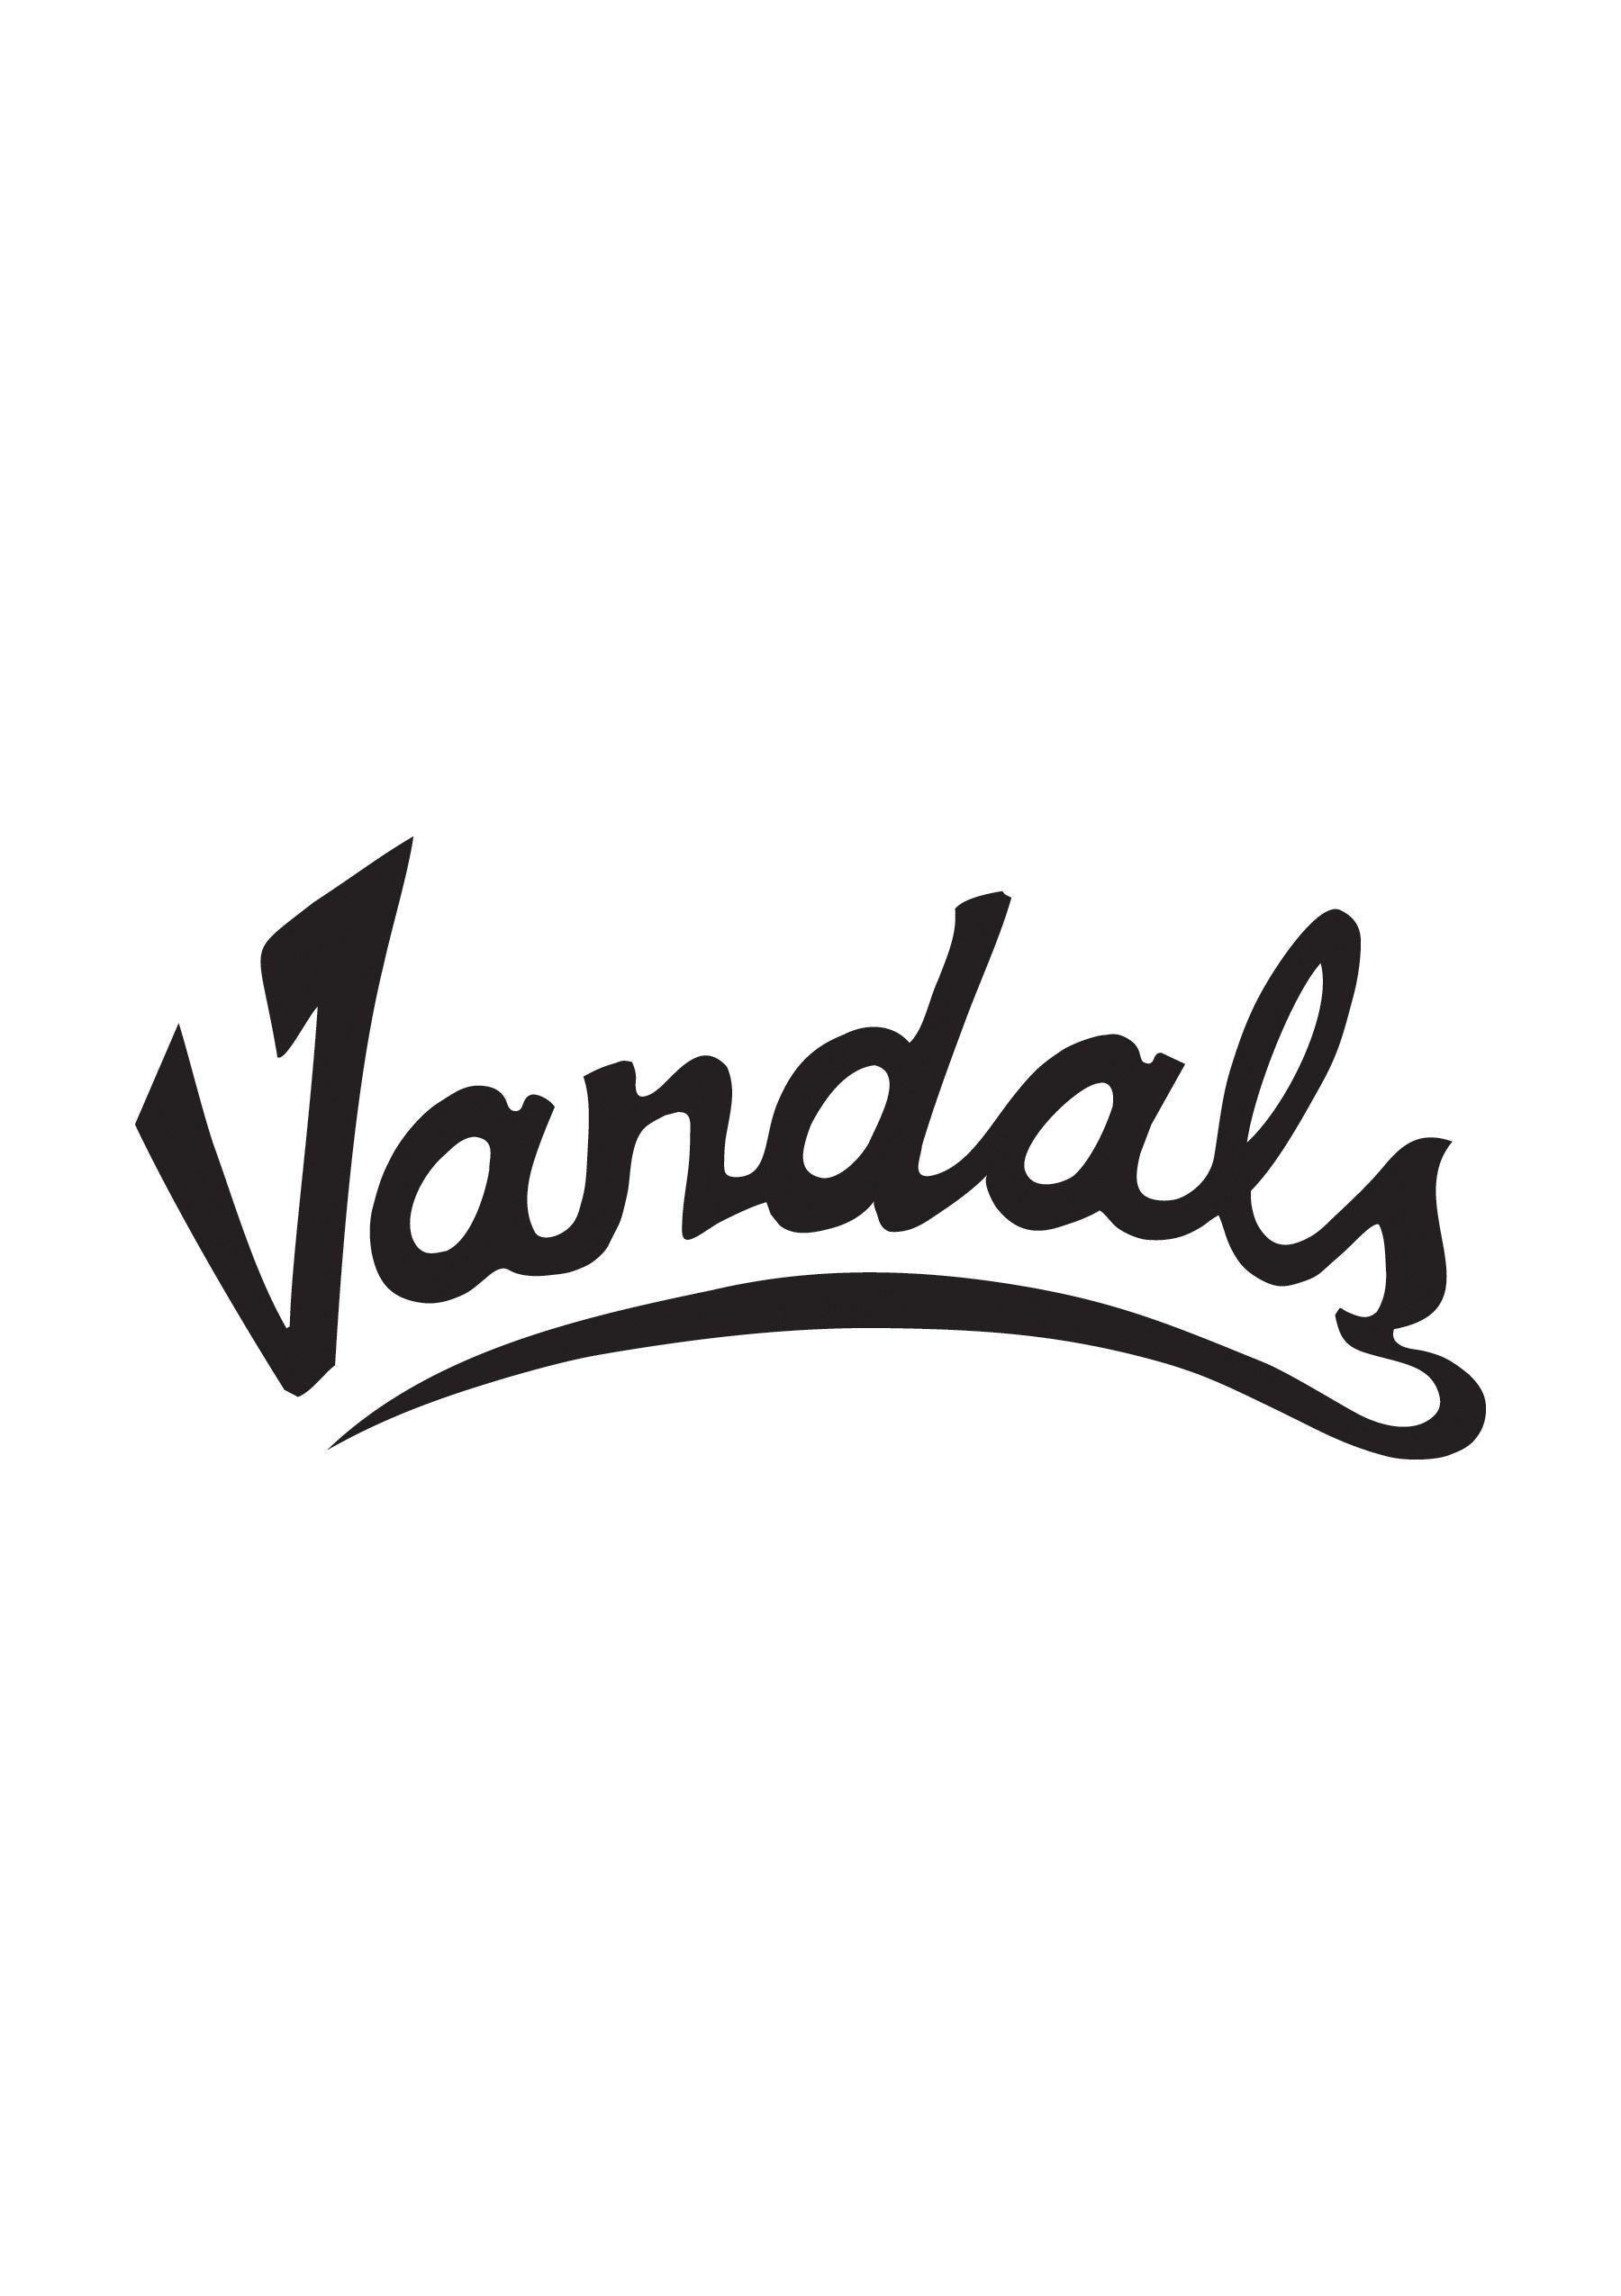 Vandals Logo - University Brand Resources Guide